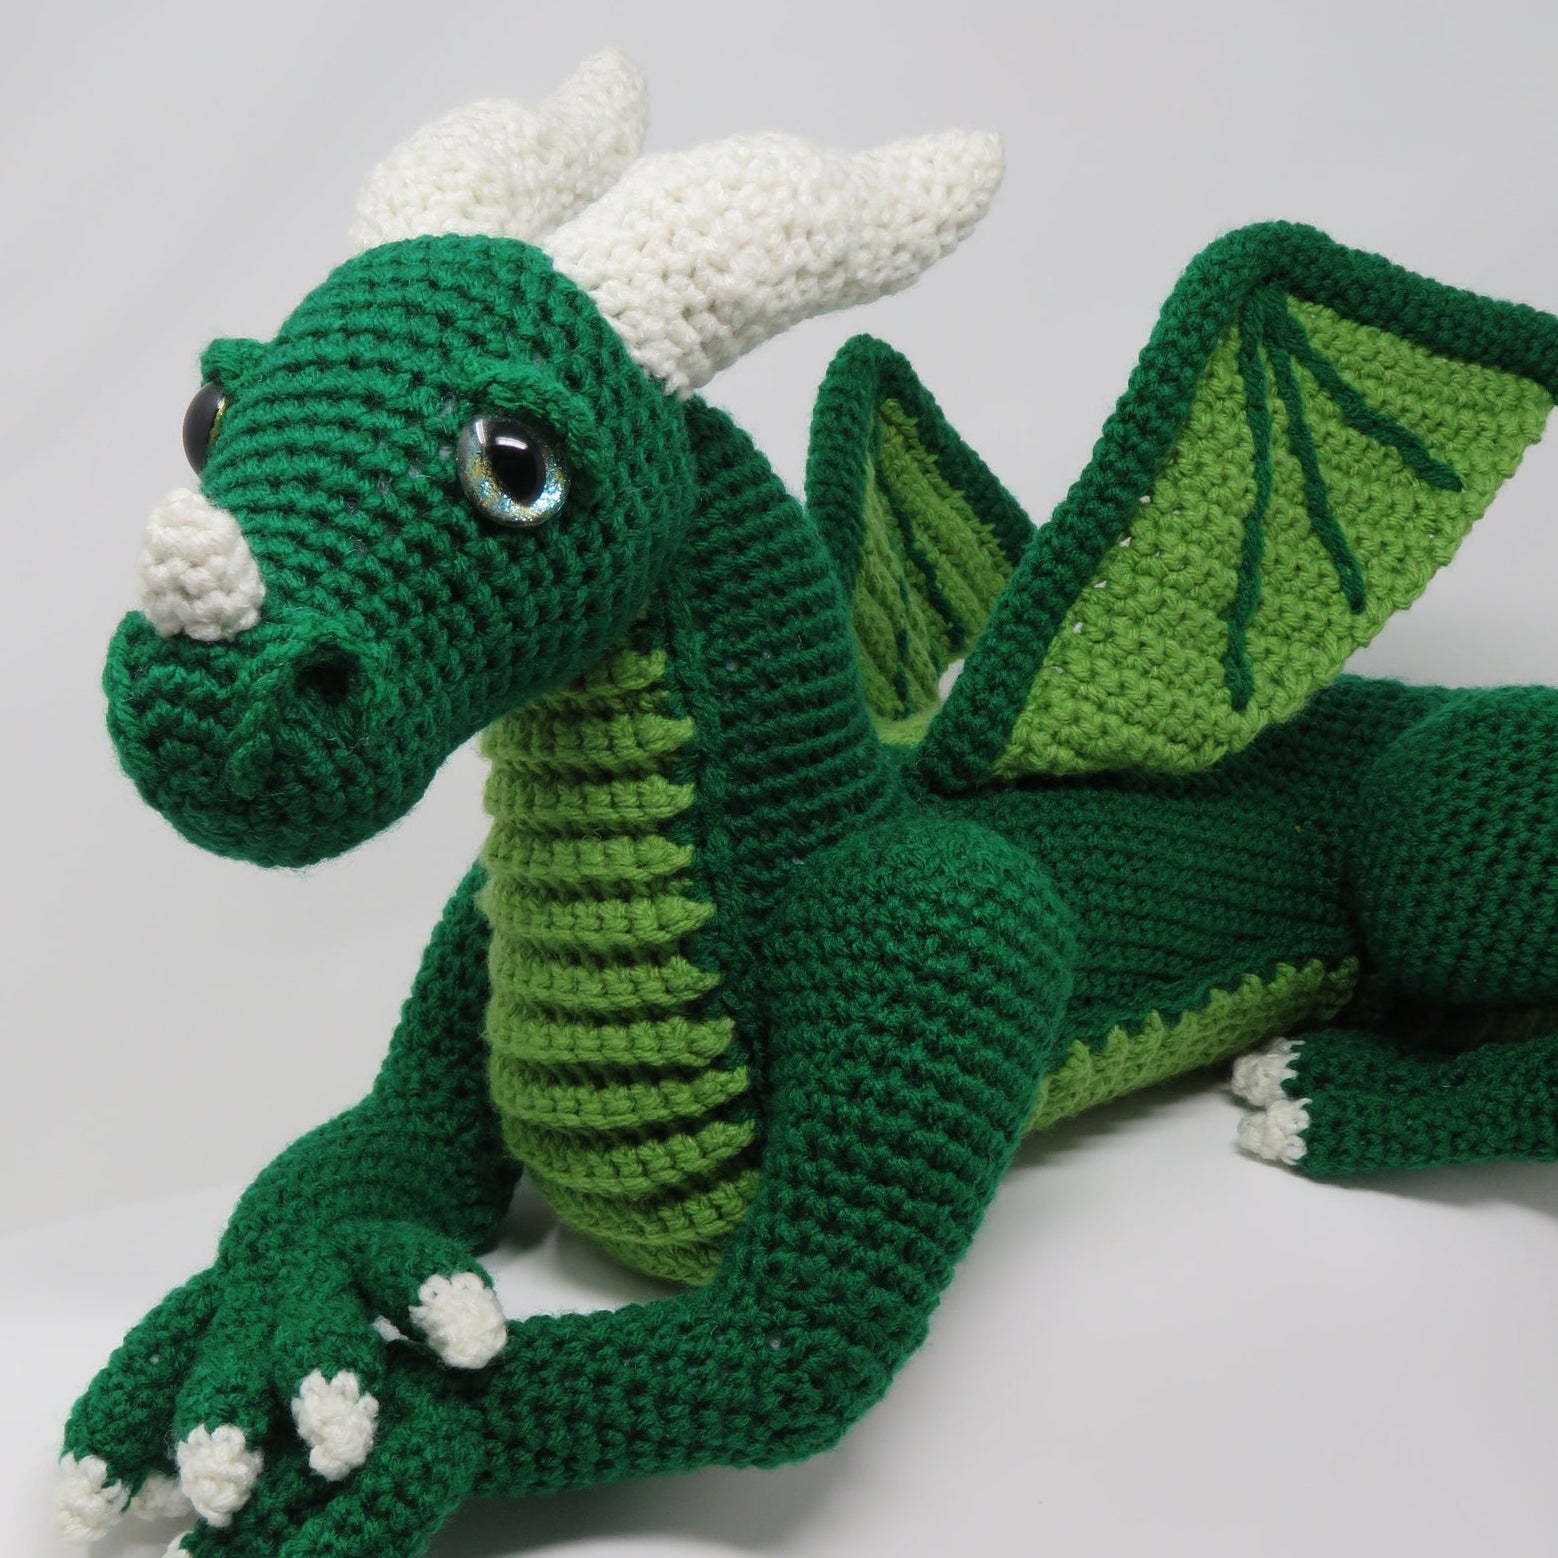 The 25 Best Dragon Crochet Patterns - Derpy Monster